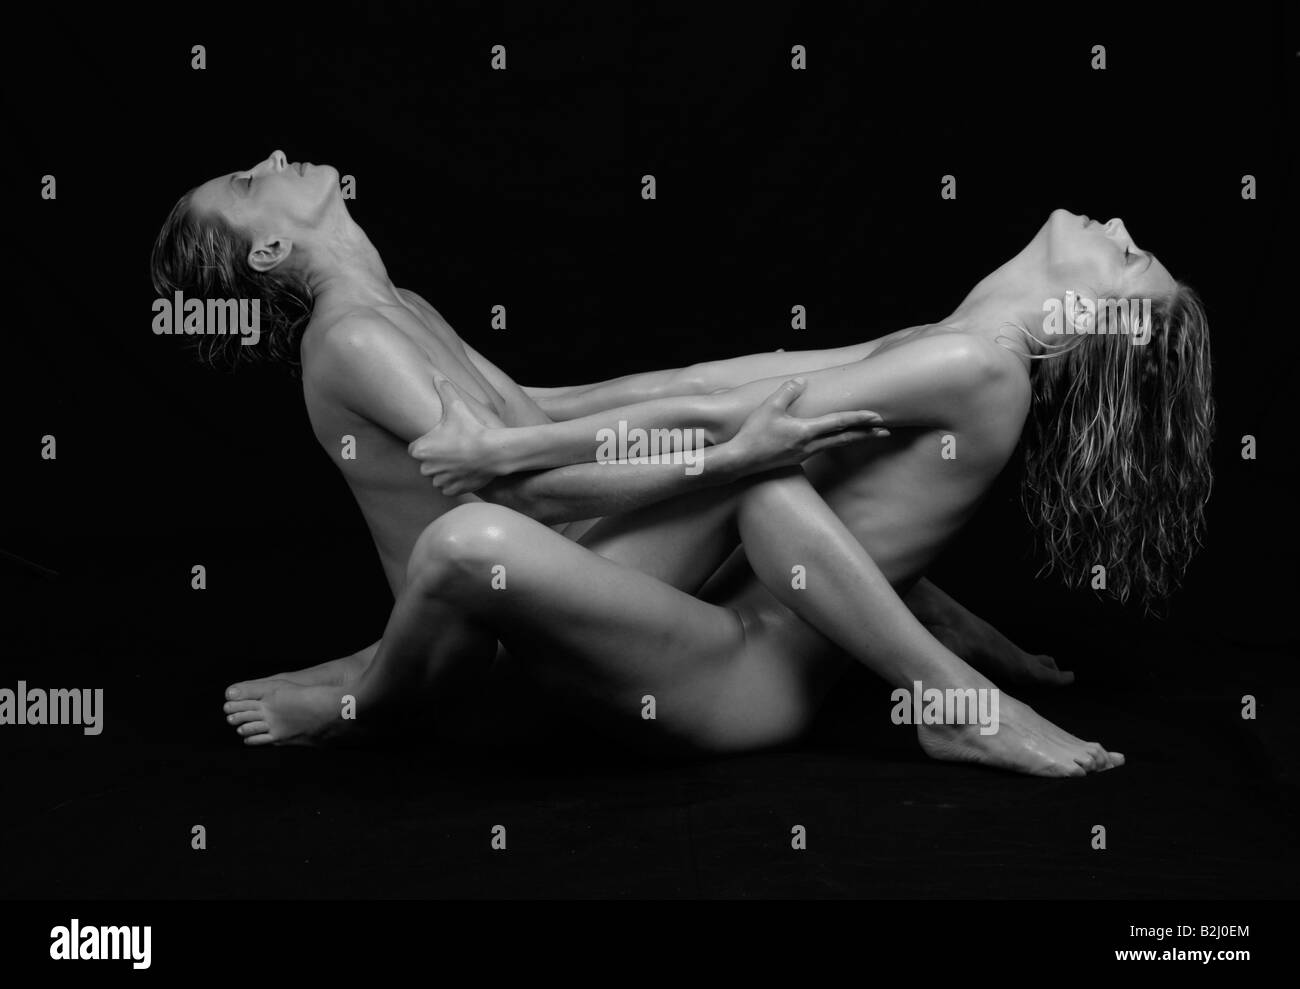 pair couple akt Nude photography art photography erotic photography erotic sex sexual man woman Stock Photo